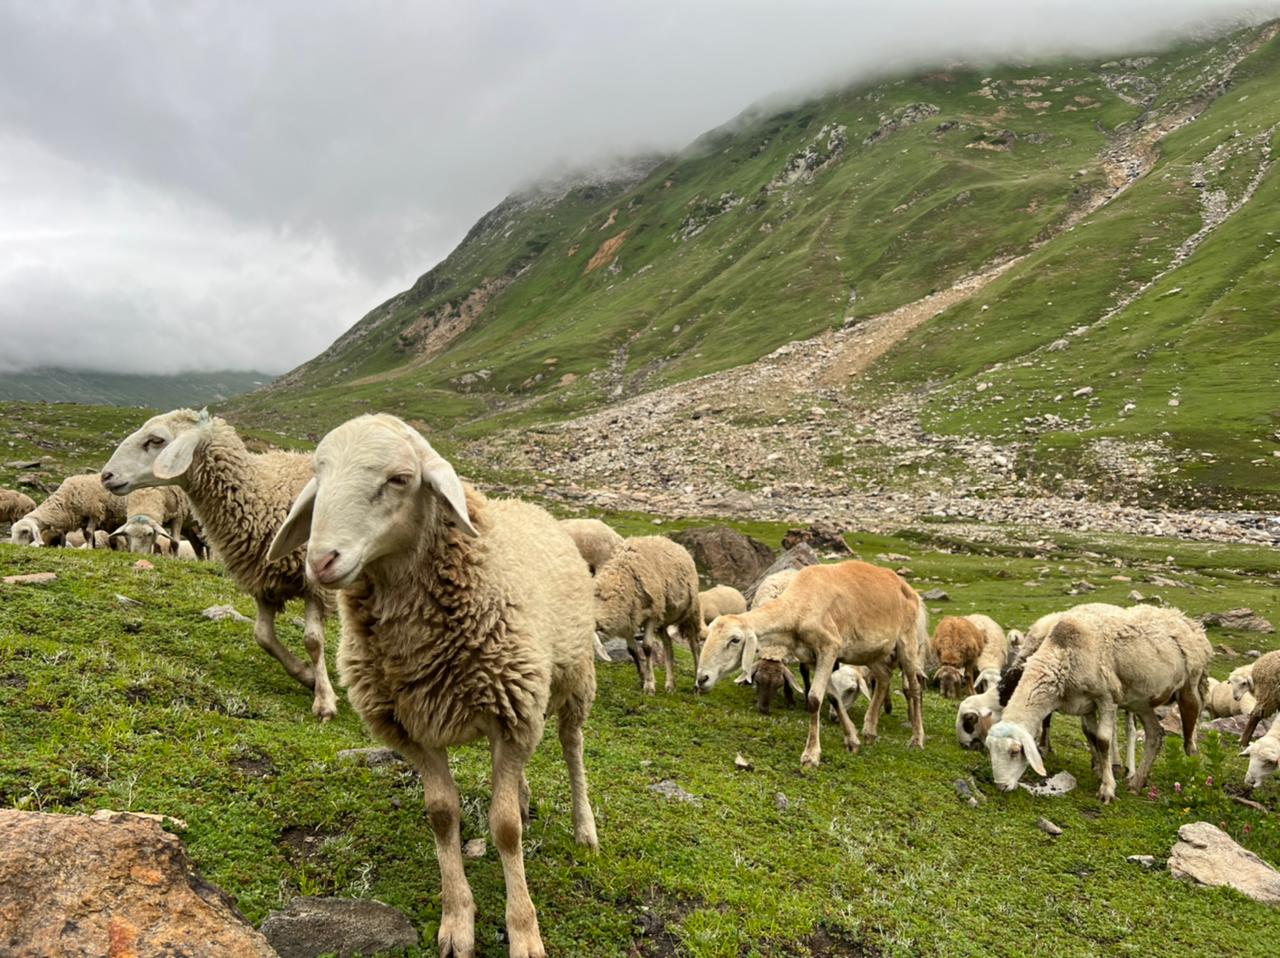 Sheep grazing at Rati Gali in Kashmir’s Neelum Valley (Image: Sajid Mir)